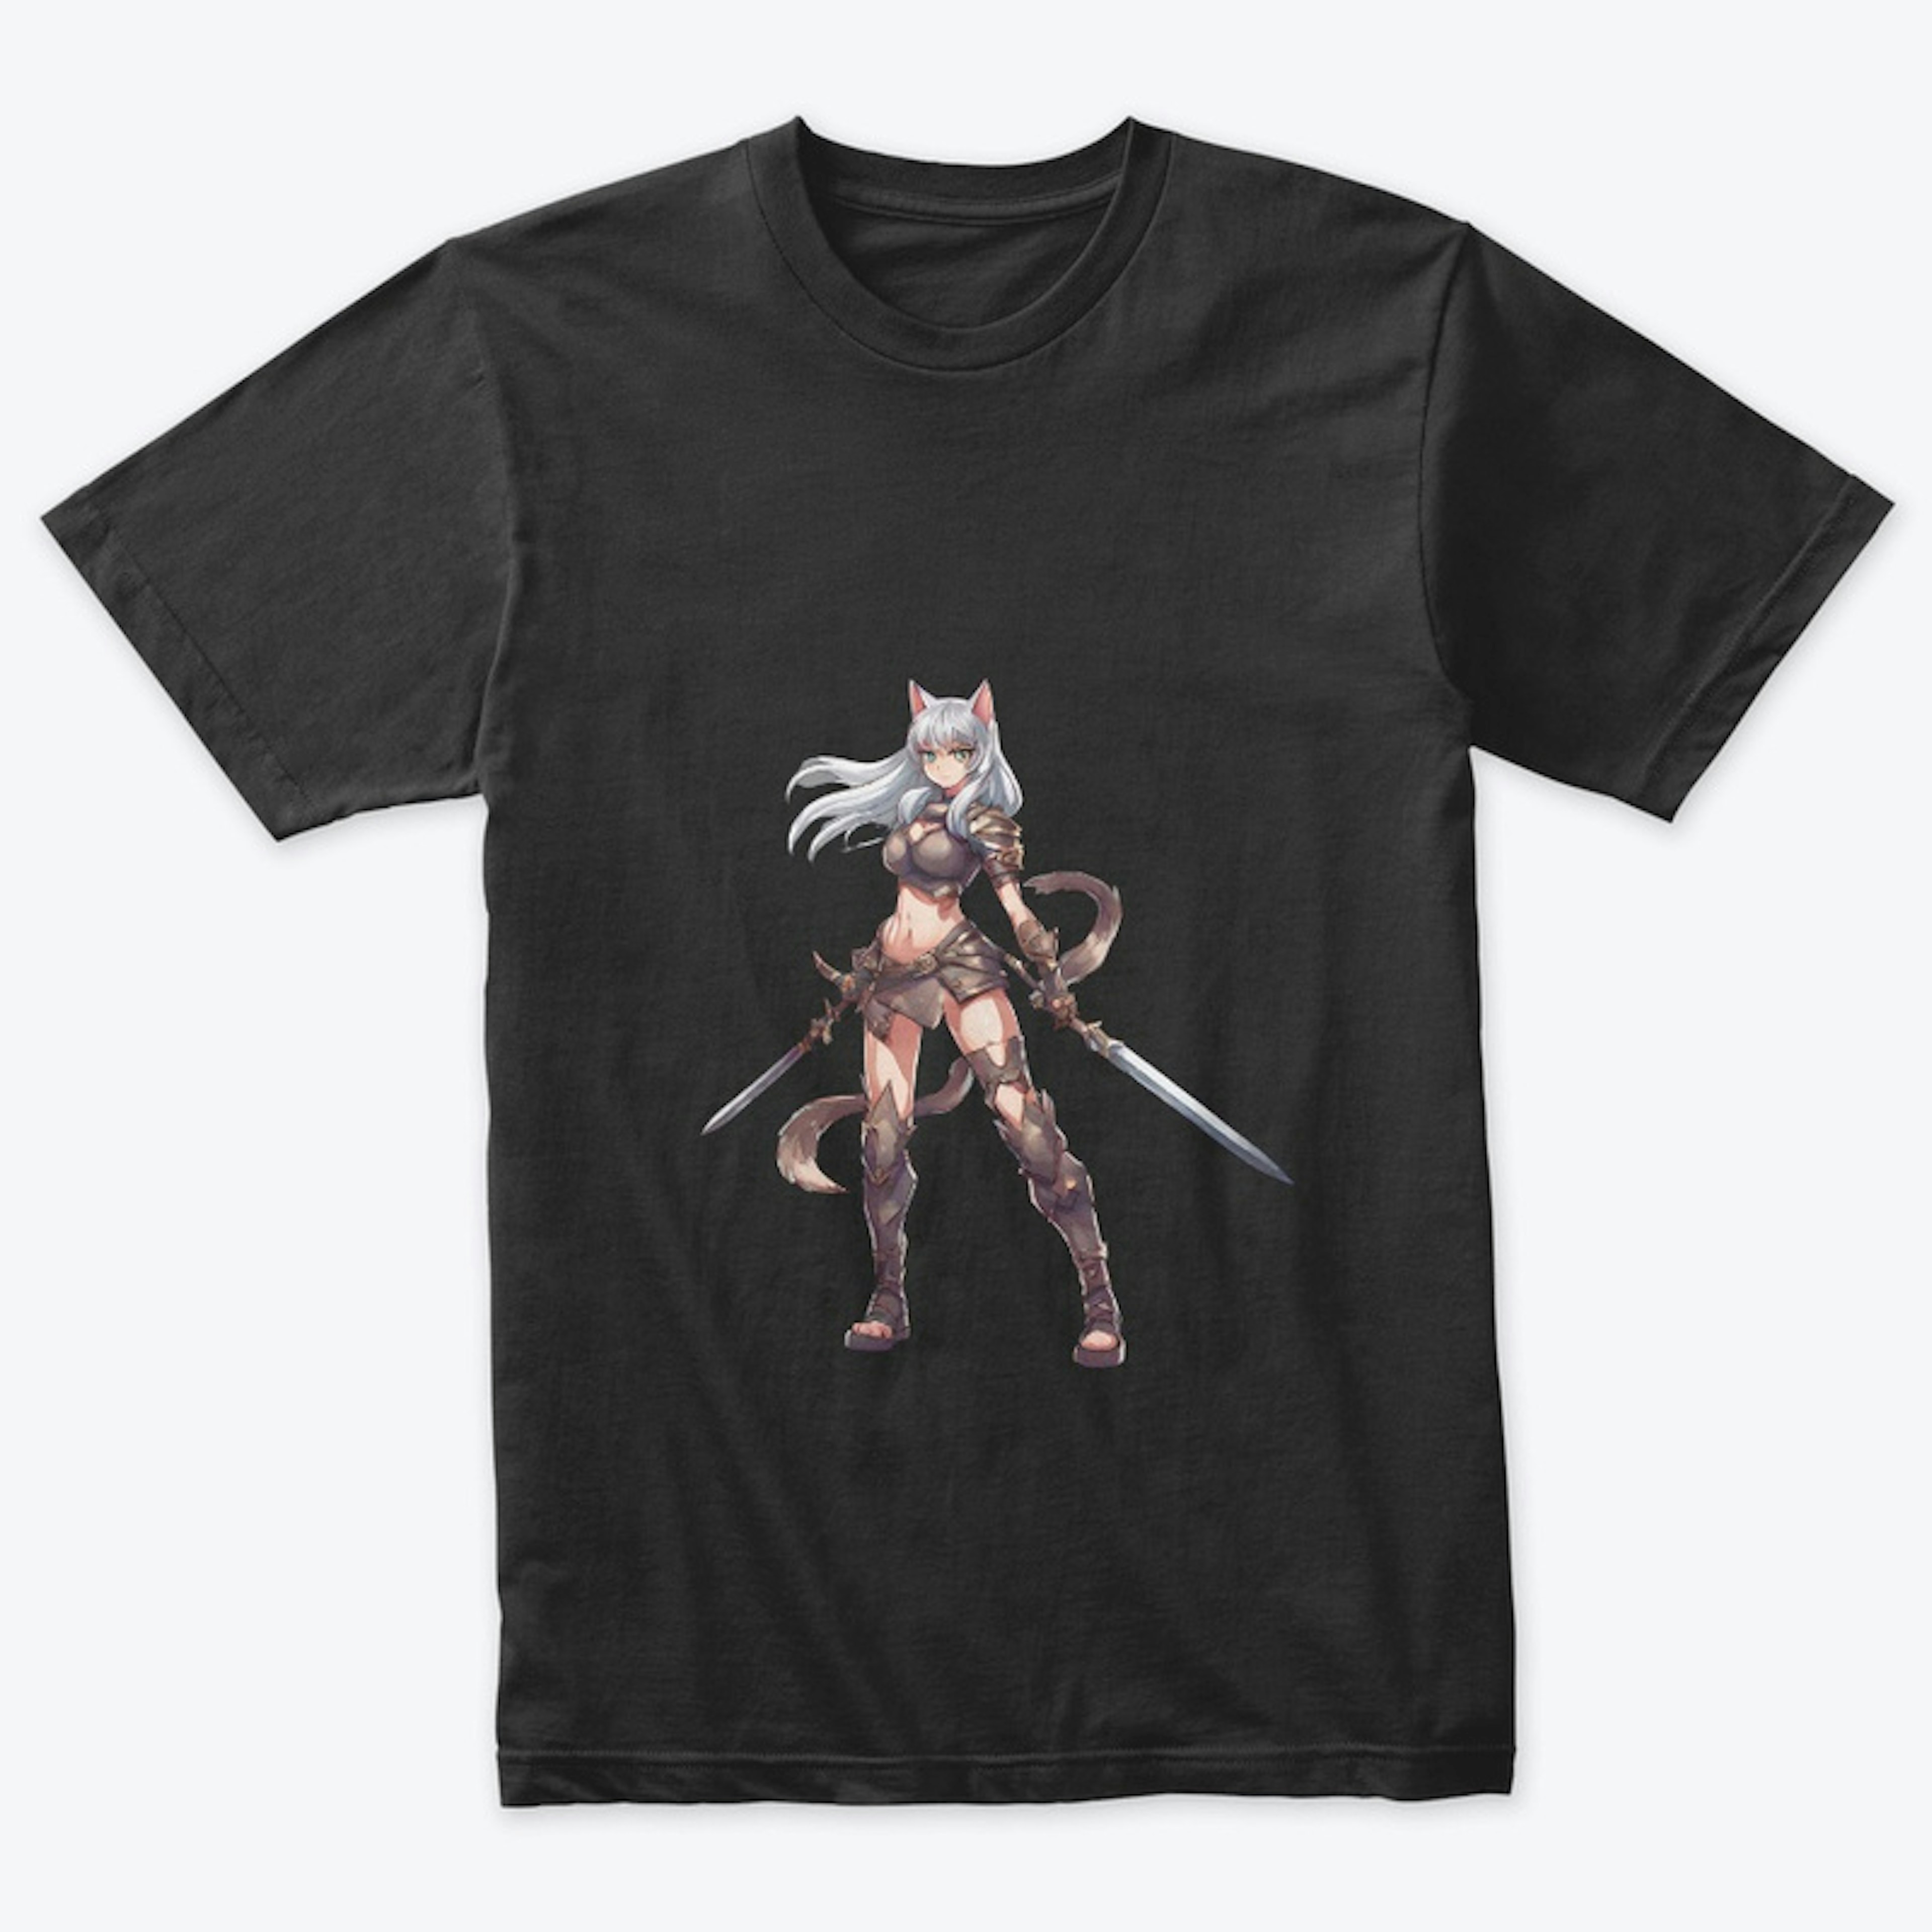 Fierce Anime Cat Girl Warrior